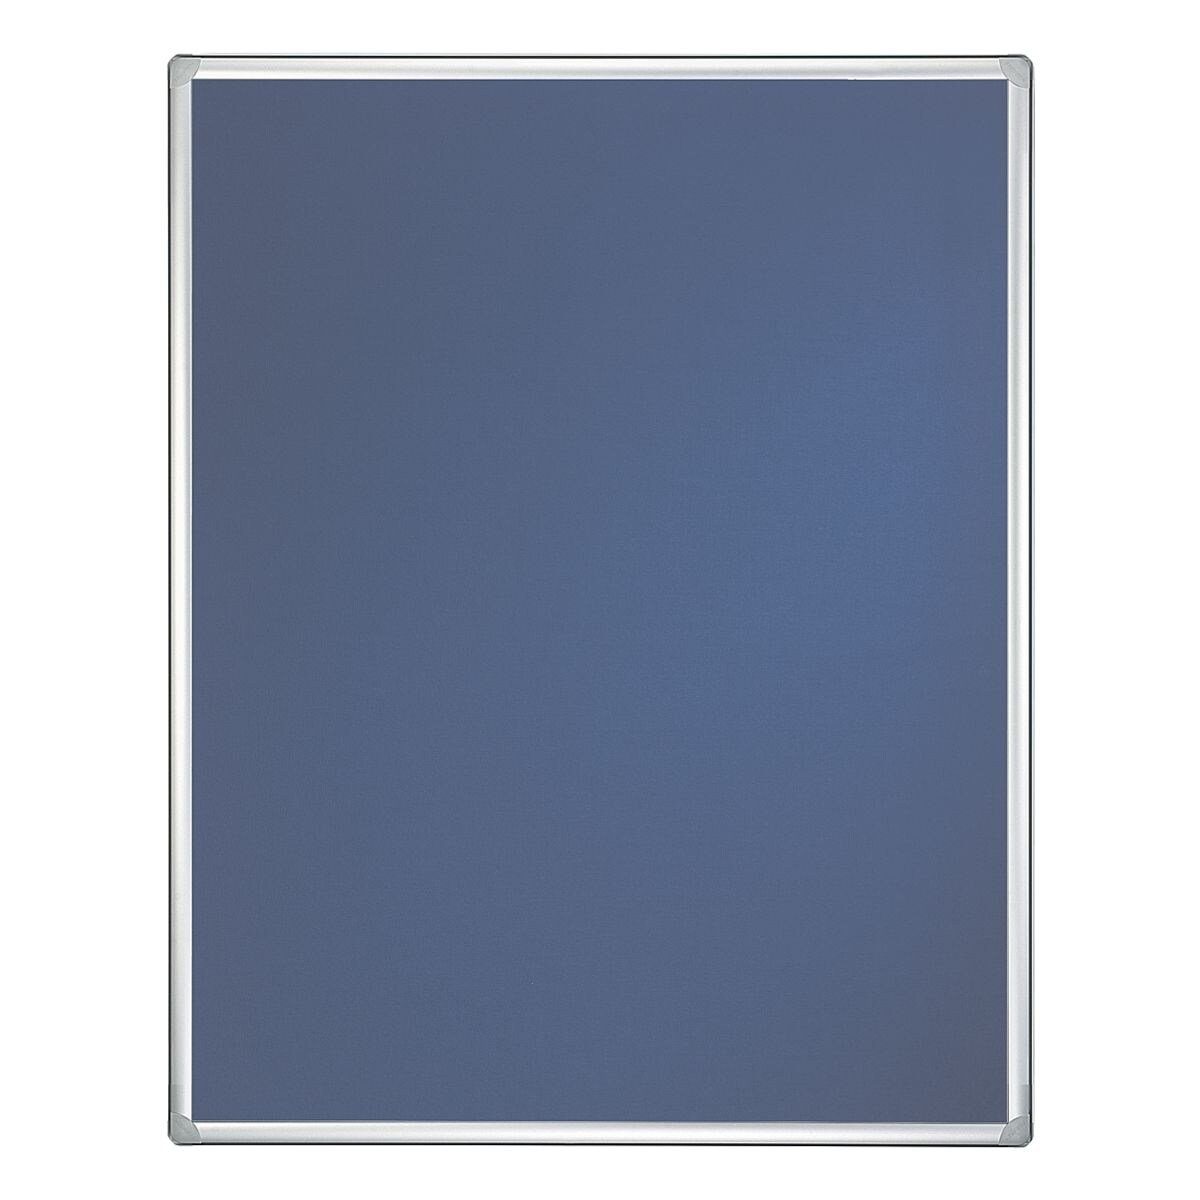 Filz, silber Pinnwand blau Pro nutzbar FRANKEN PTD8303, beidseitig